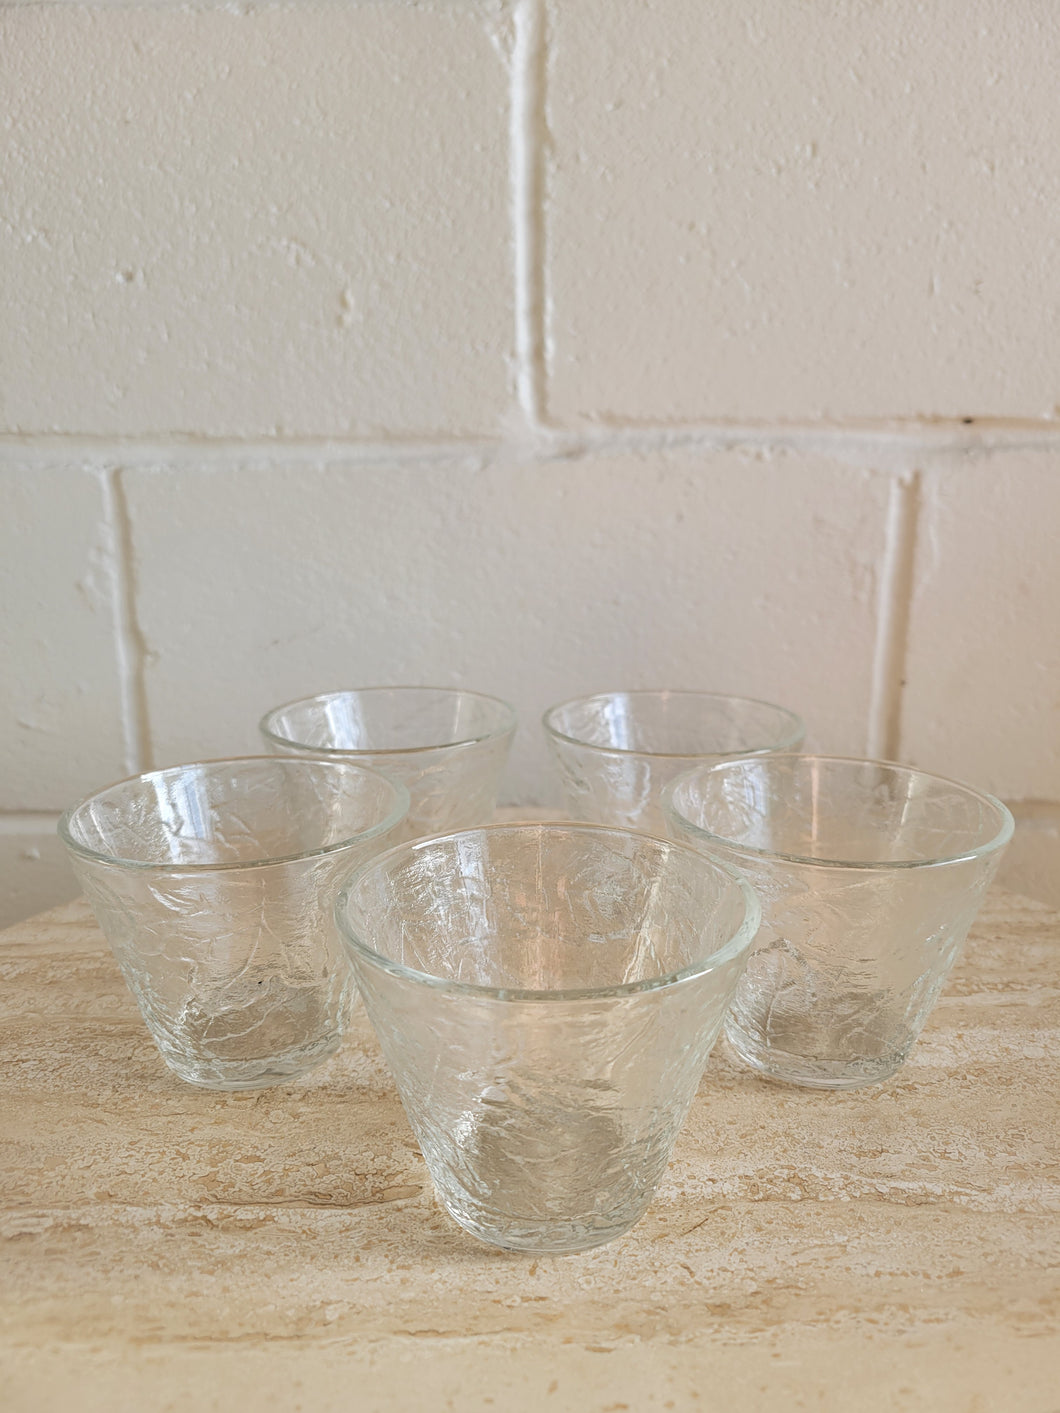 Set of Vintage Indiana Glass Co. Rocks Glasses - 5 count